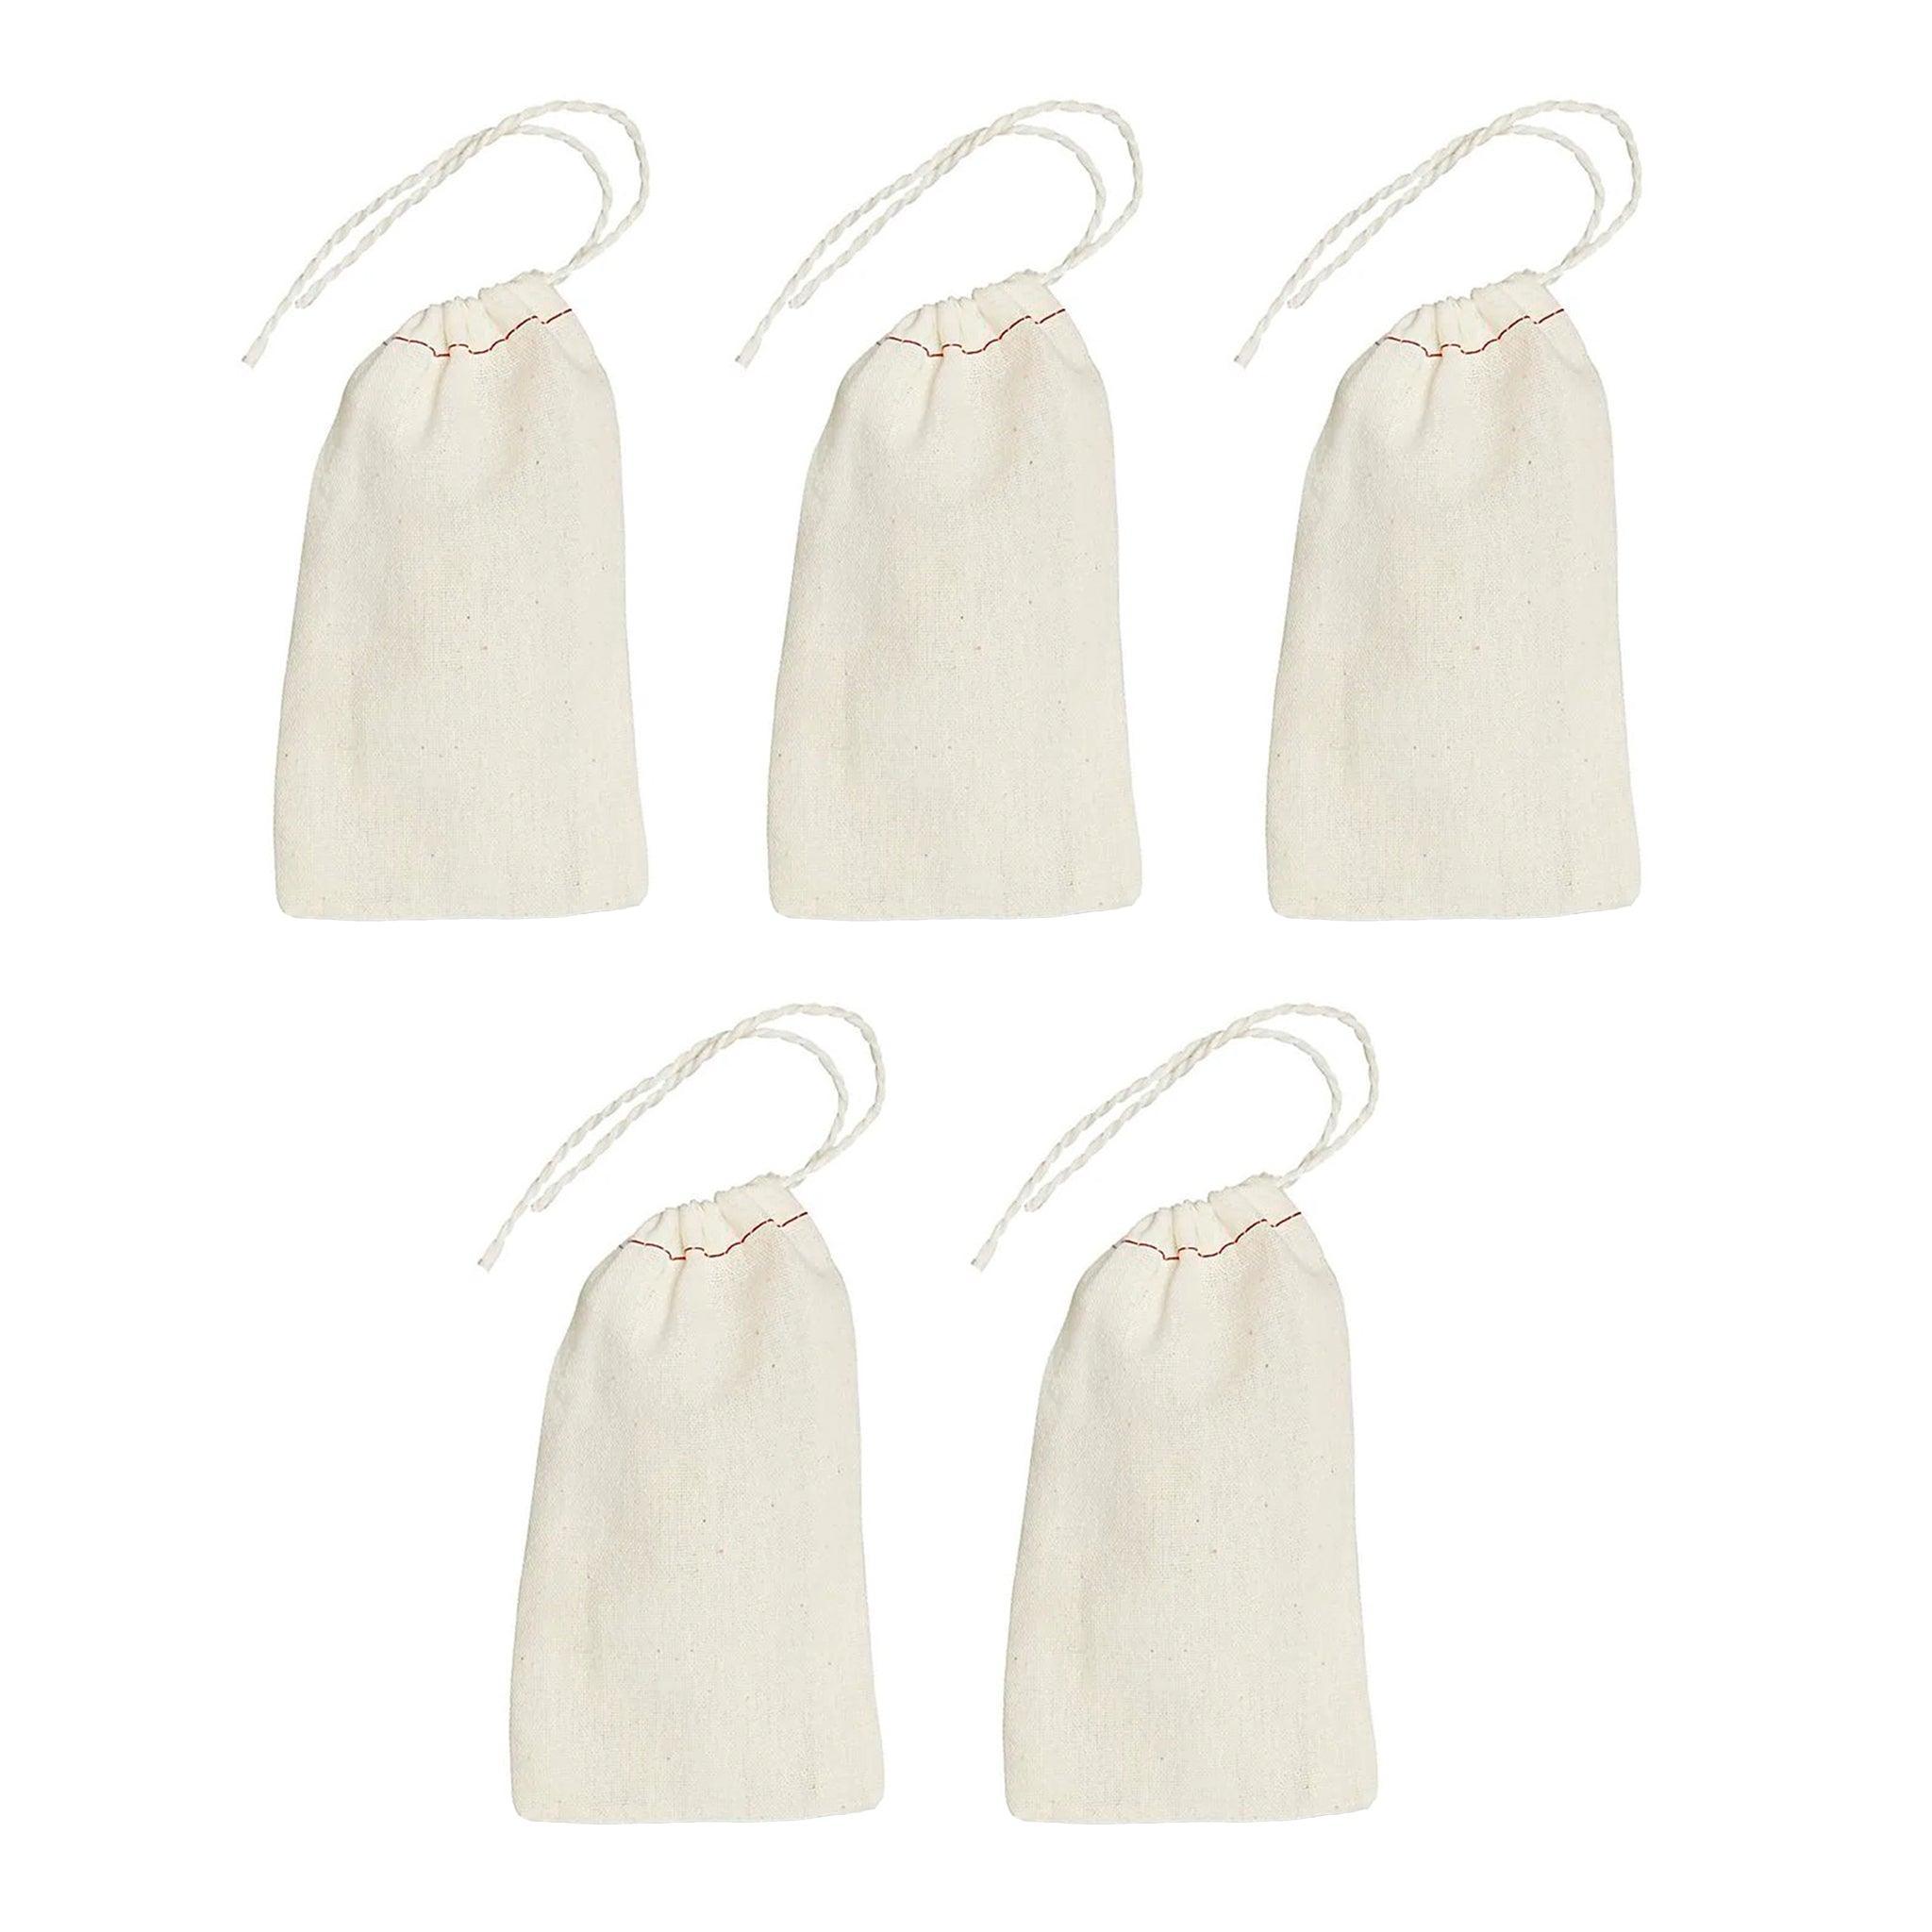 eco 100% cotton bag (5 pack) - local - letsbelocal.ca